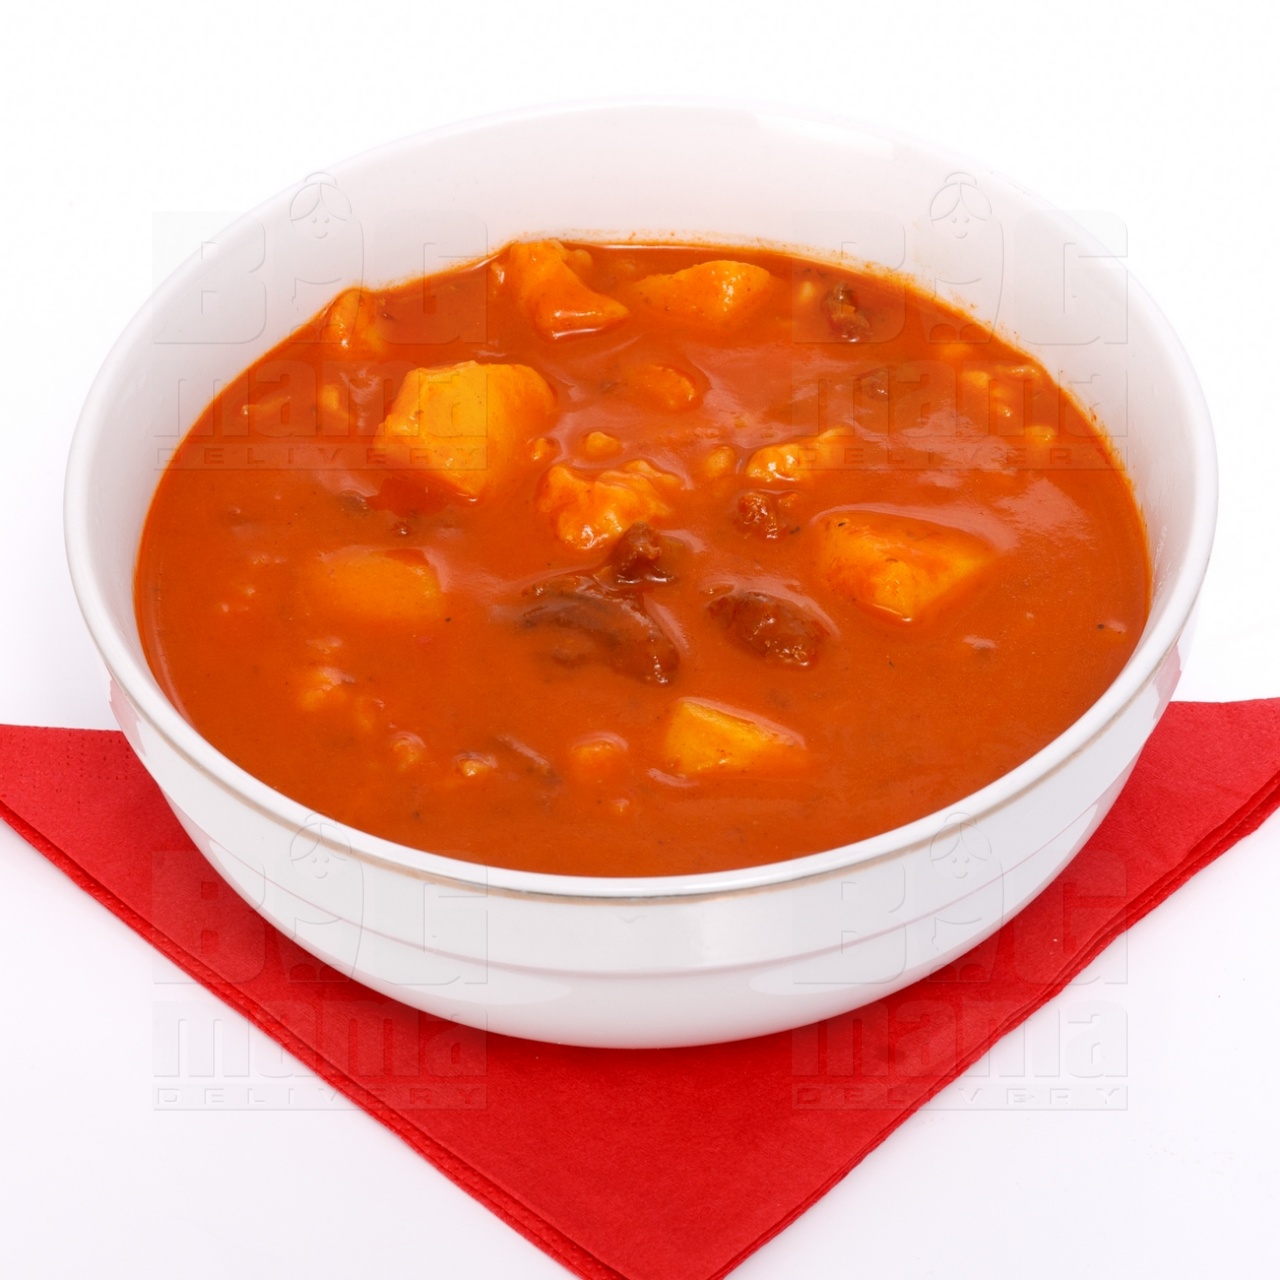 Product #4 image - Gulash soup